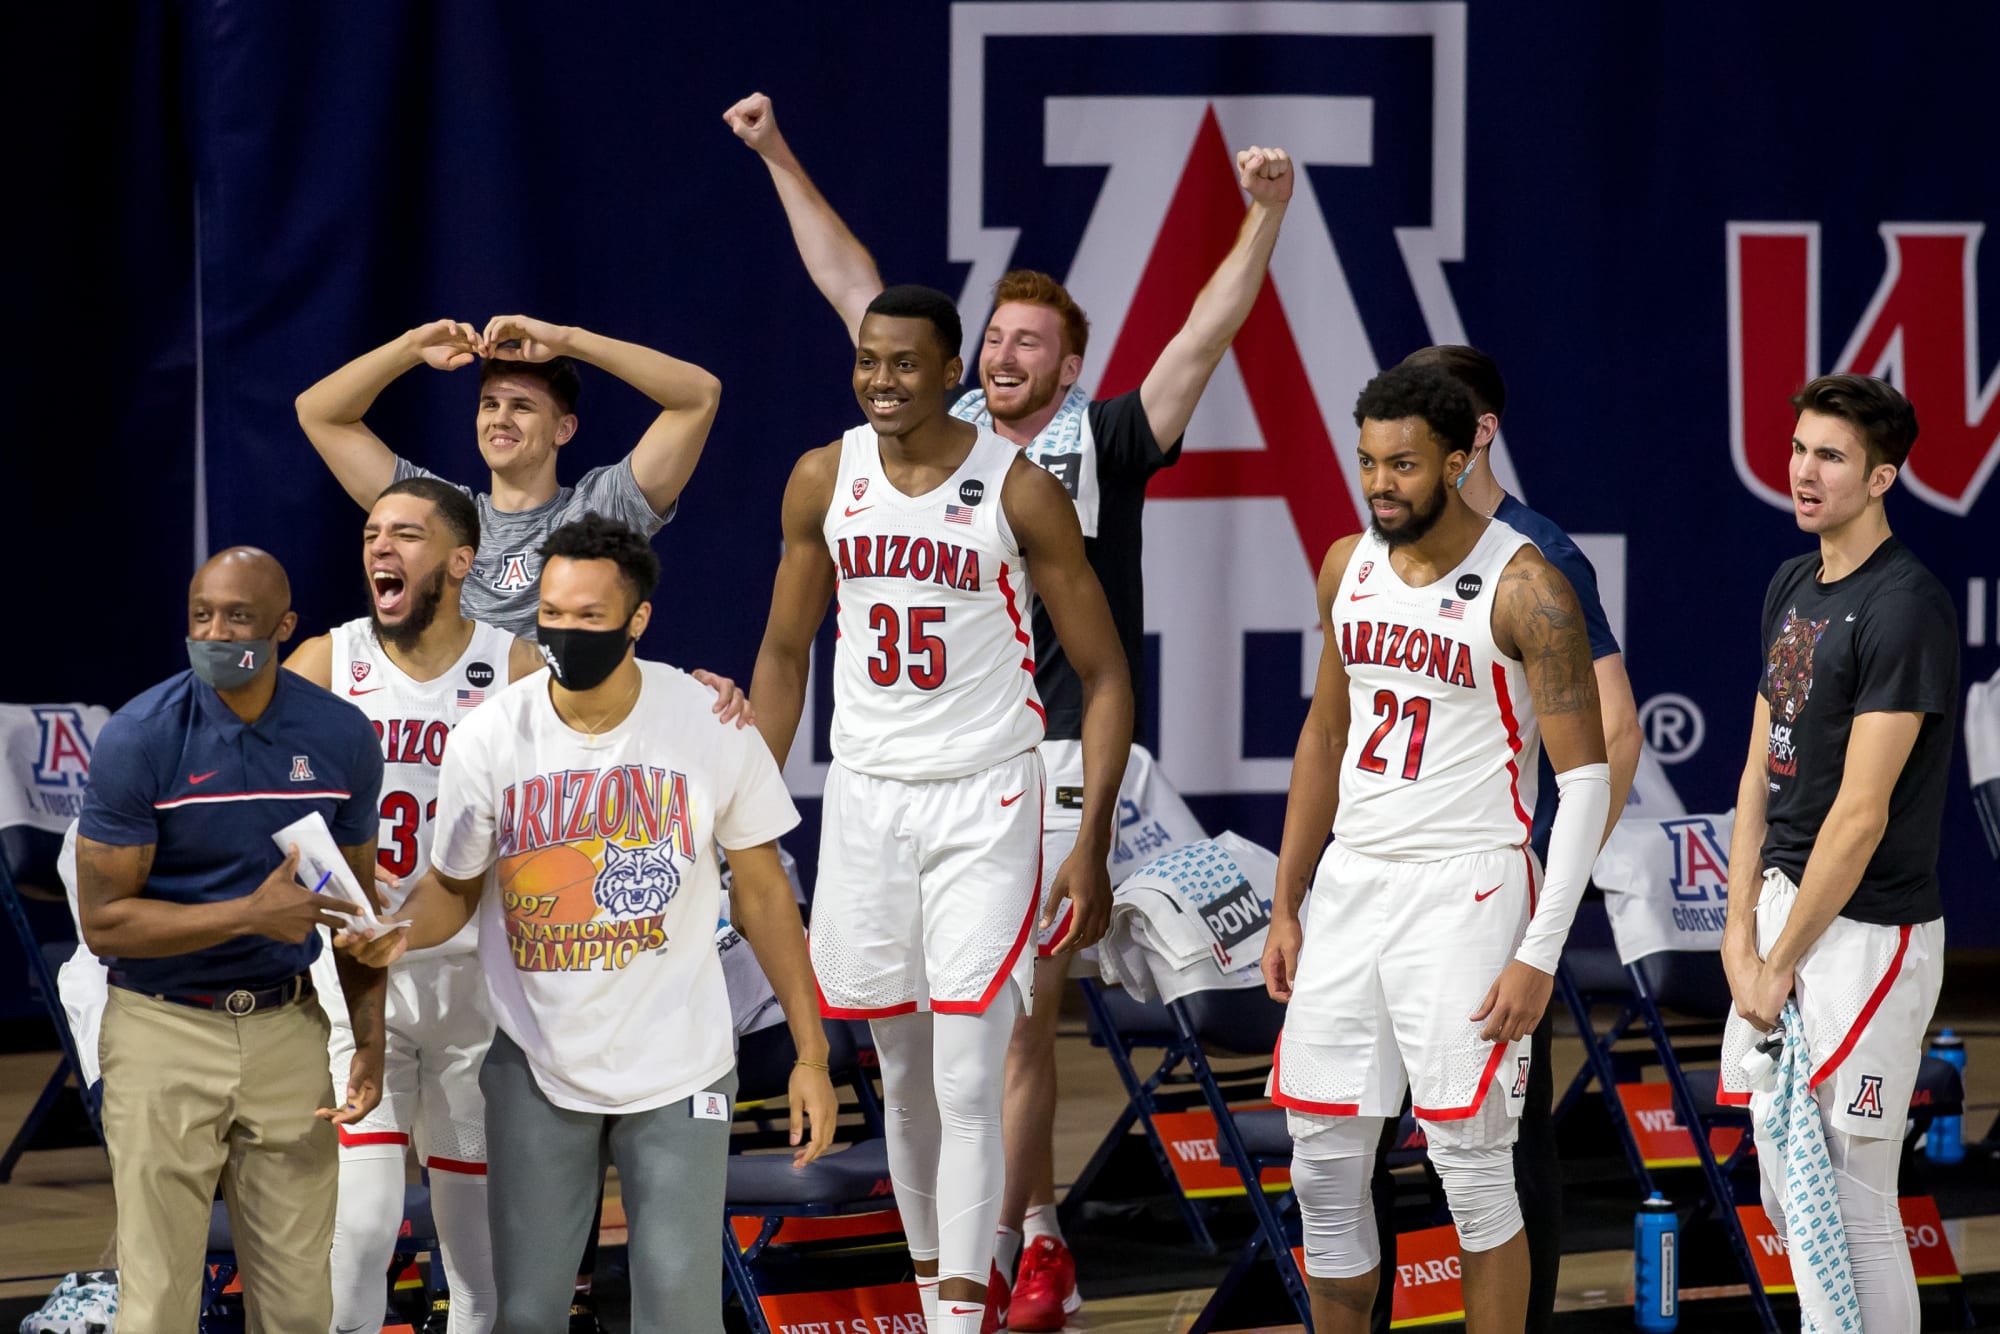 Arizona Basketball sets the RedBlue game for October 2